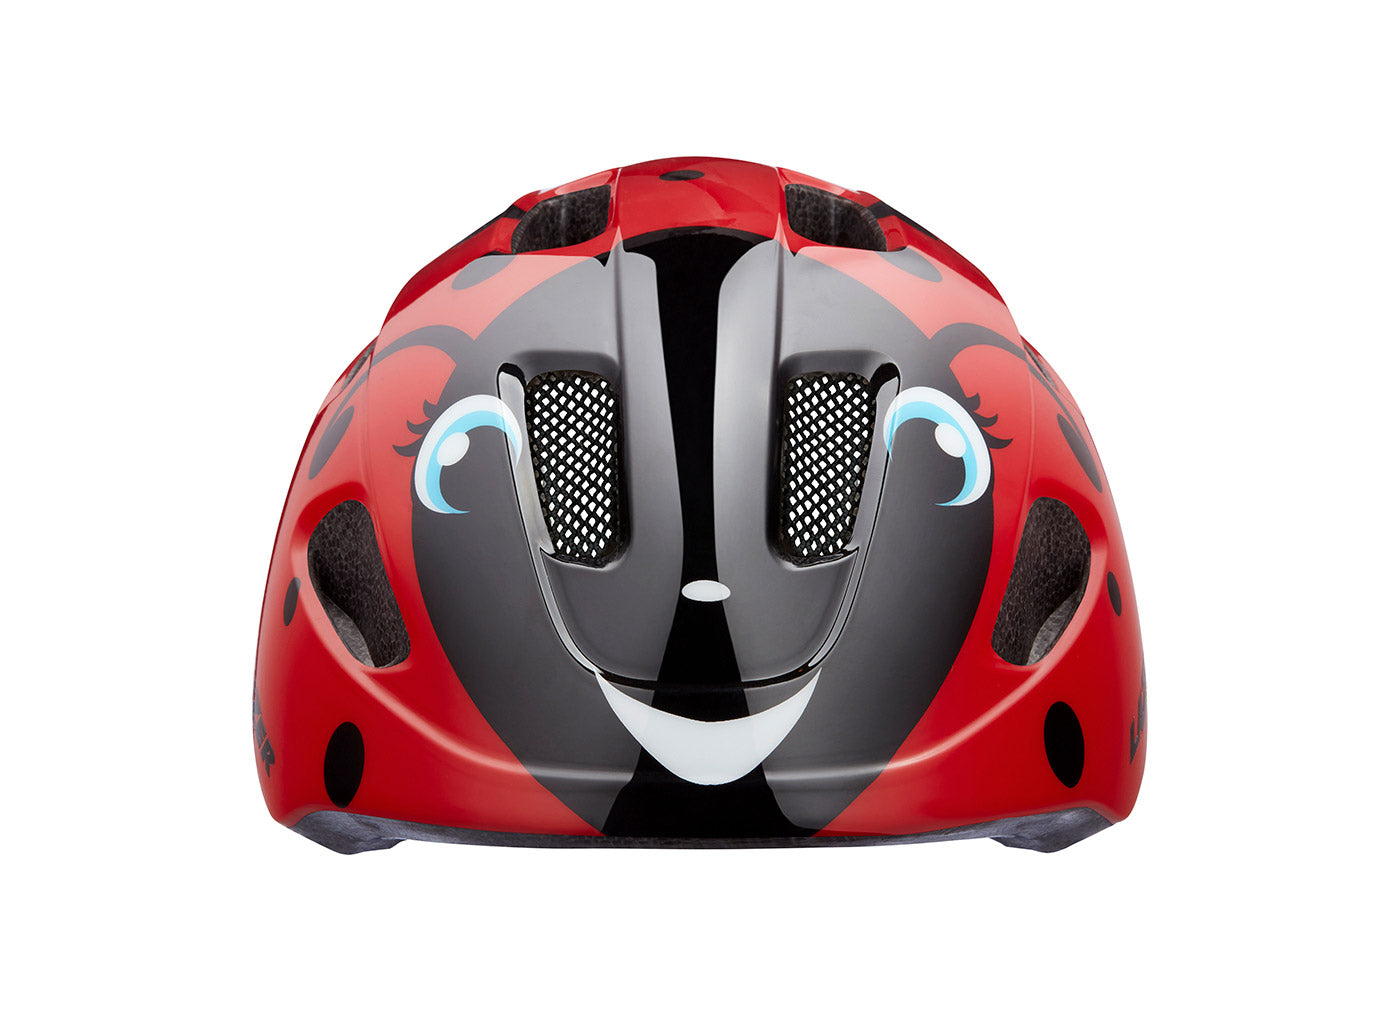 lazer-kids-helmet-pnut-kineticore-lady-bug-red